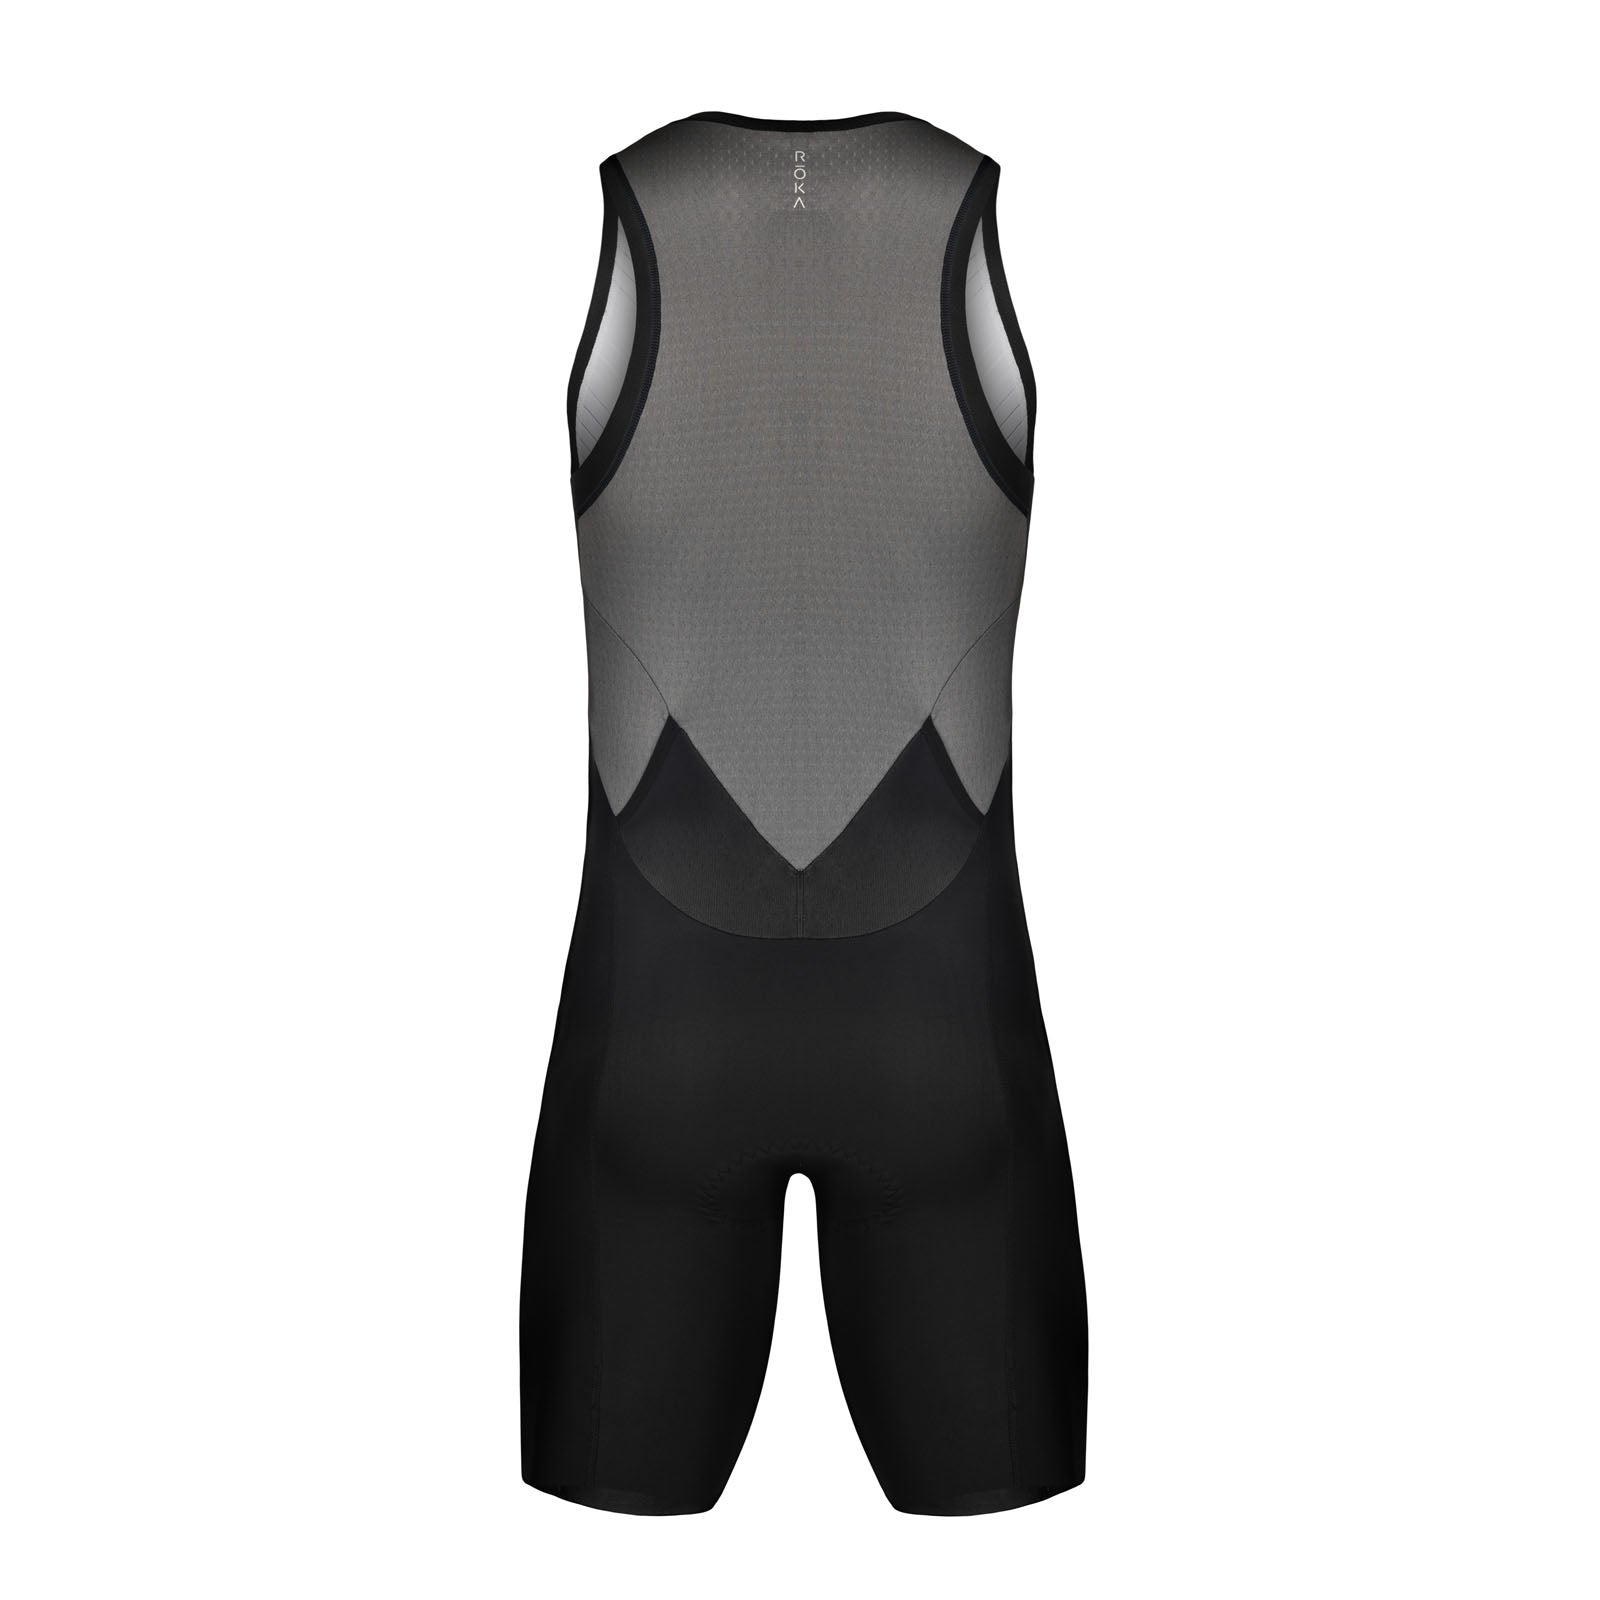 Men's Titan PRO Element Triathlon Suit